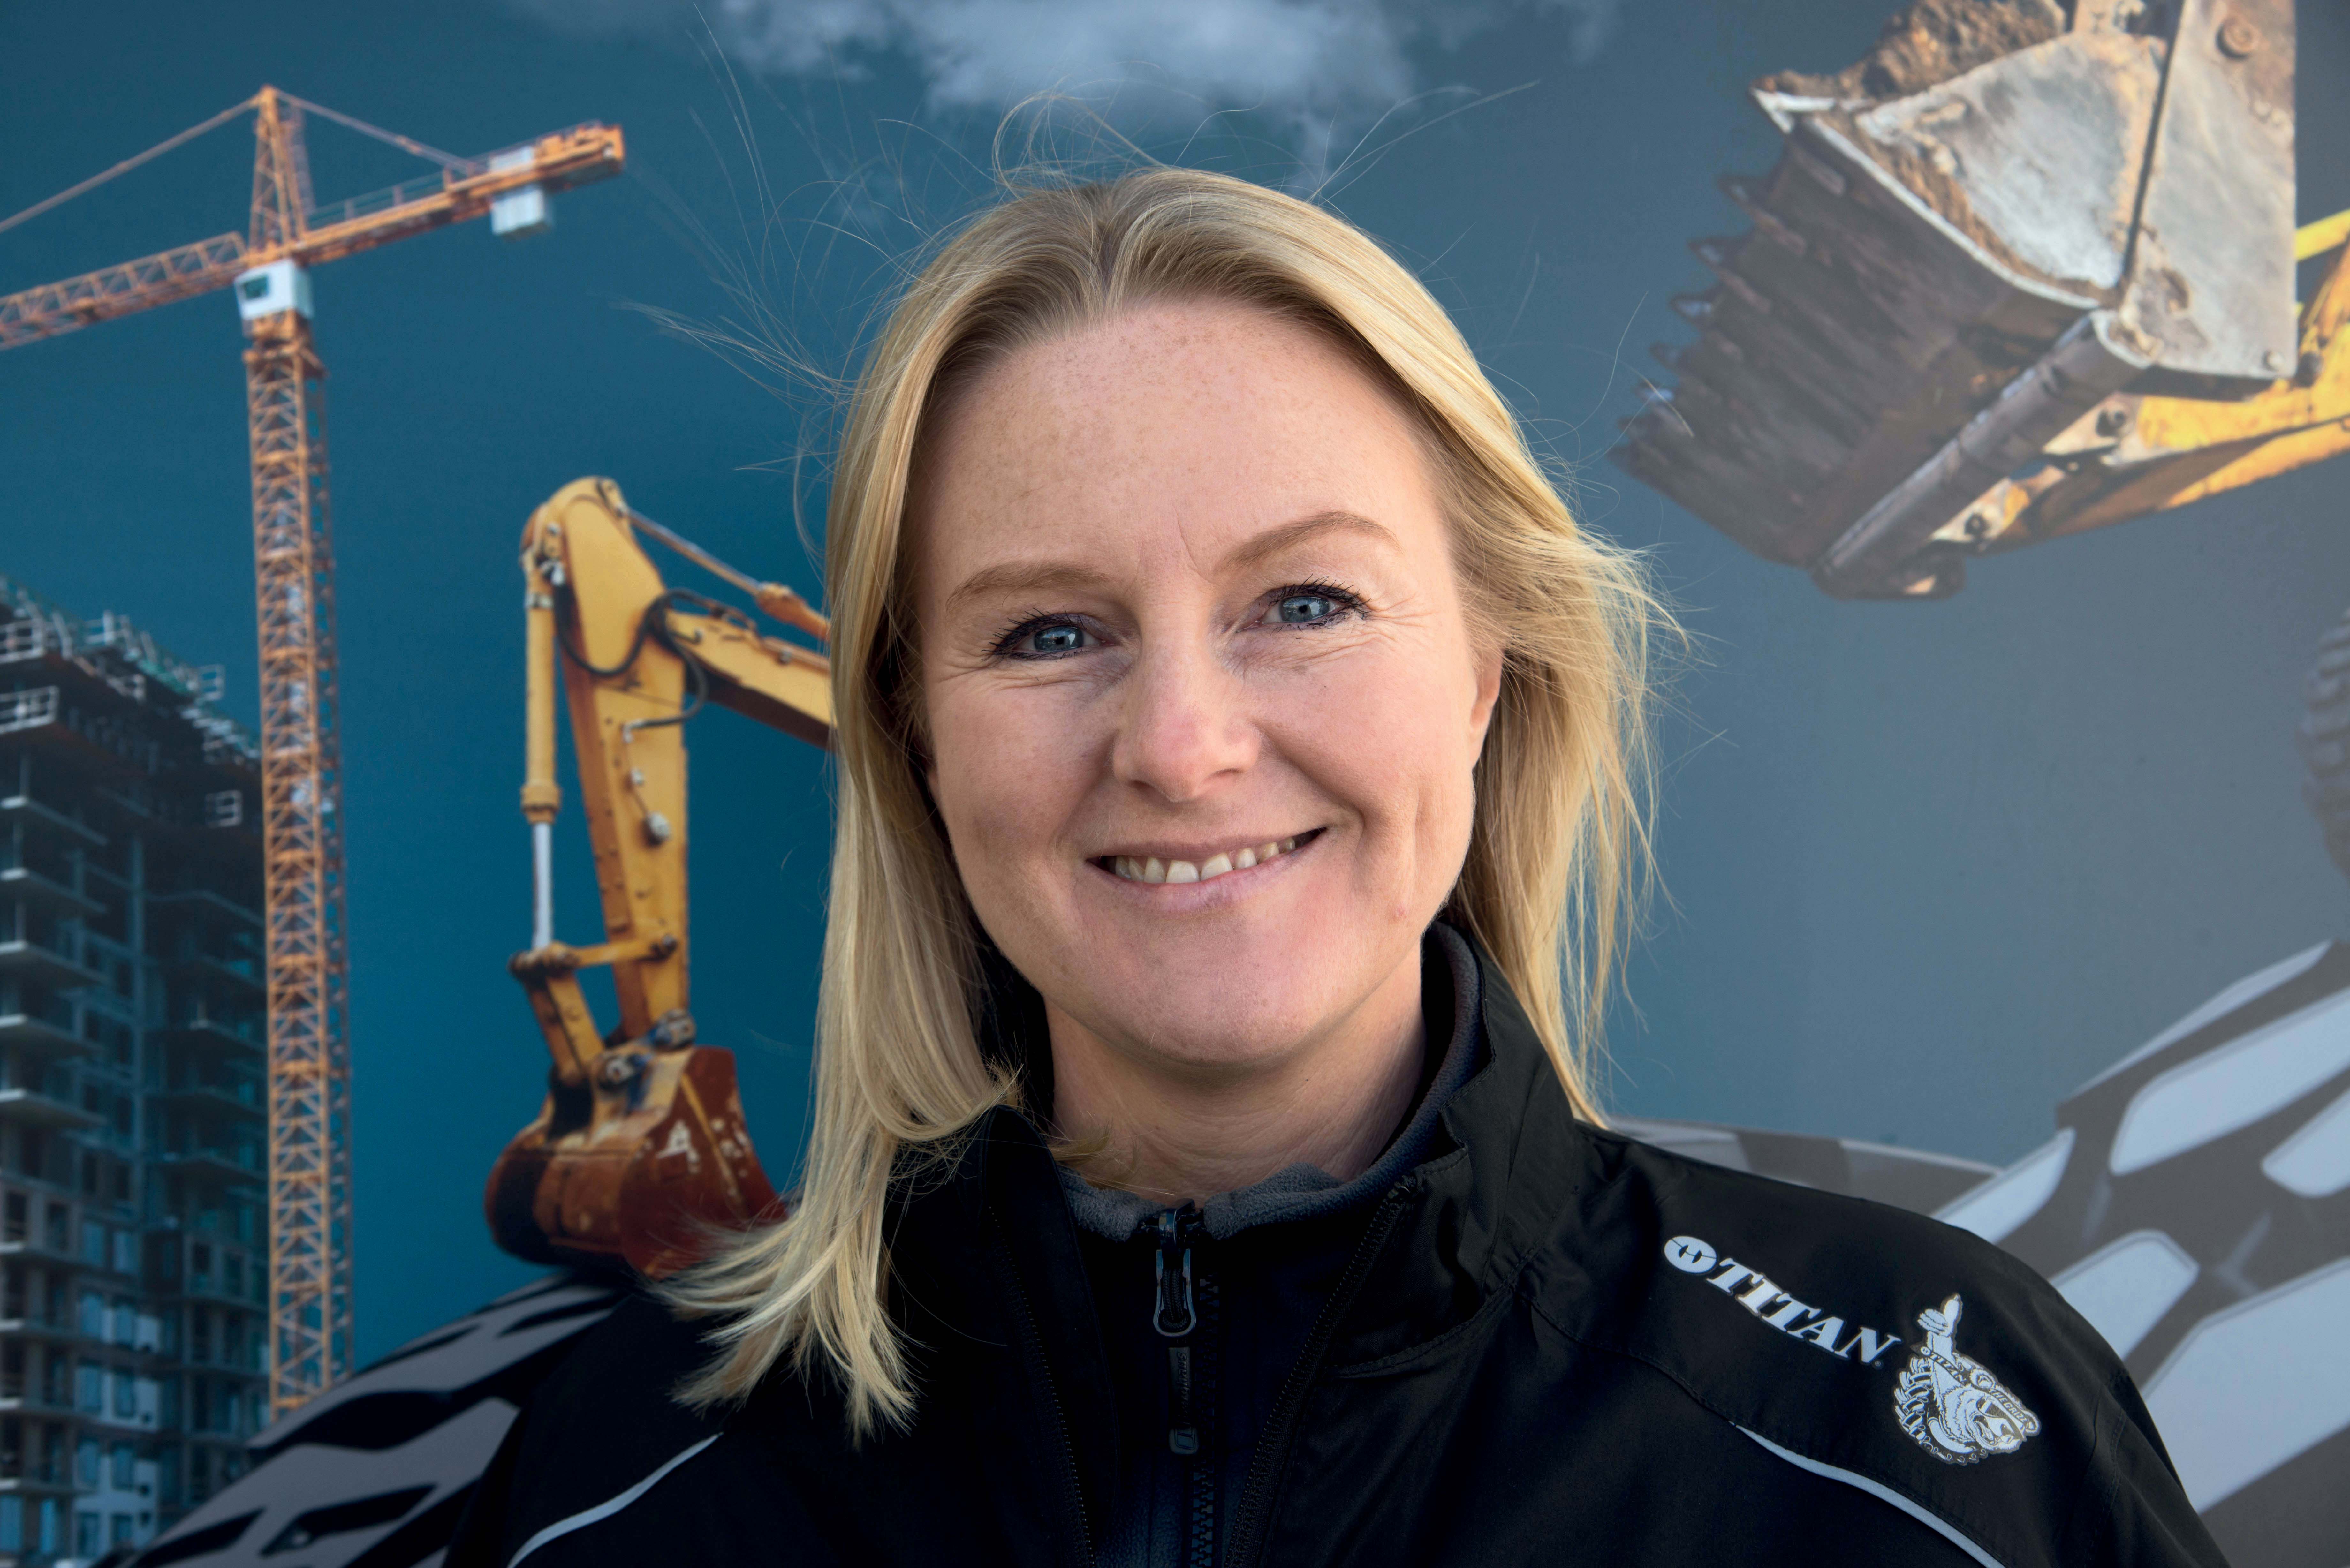 Lindsay Hart, European tyre sales manager for Titan, 